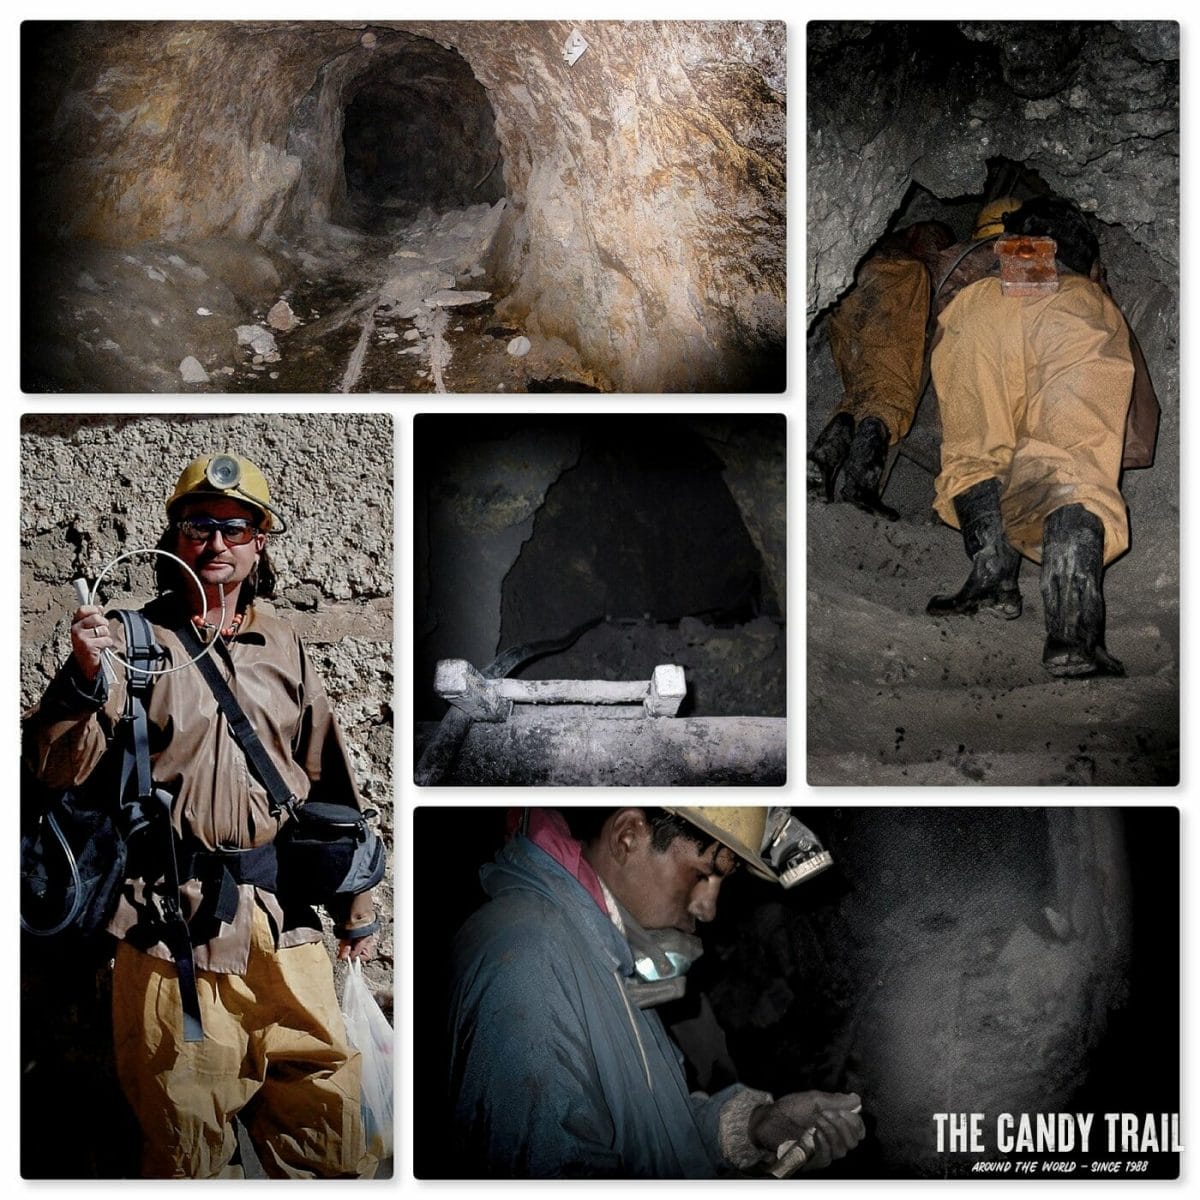 Inside the mines of Potosi in Bolivia.